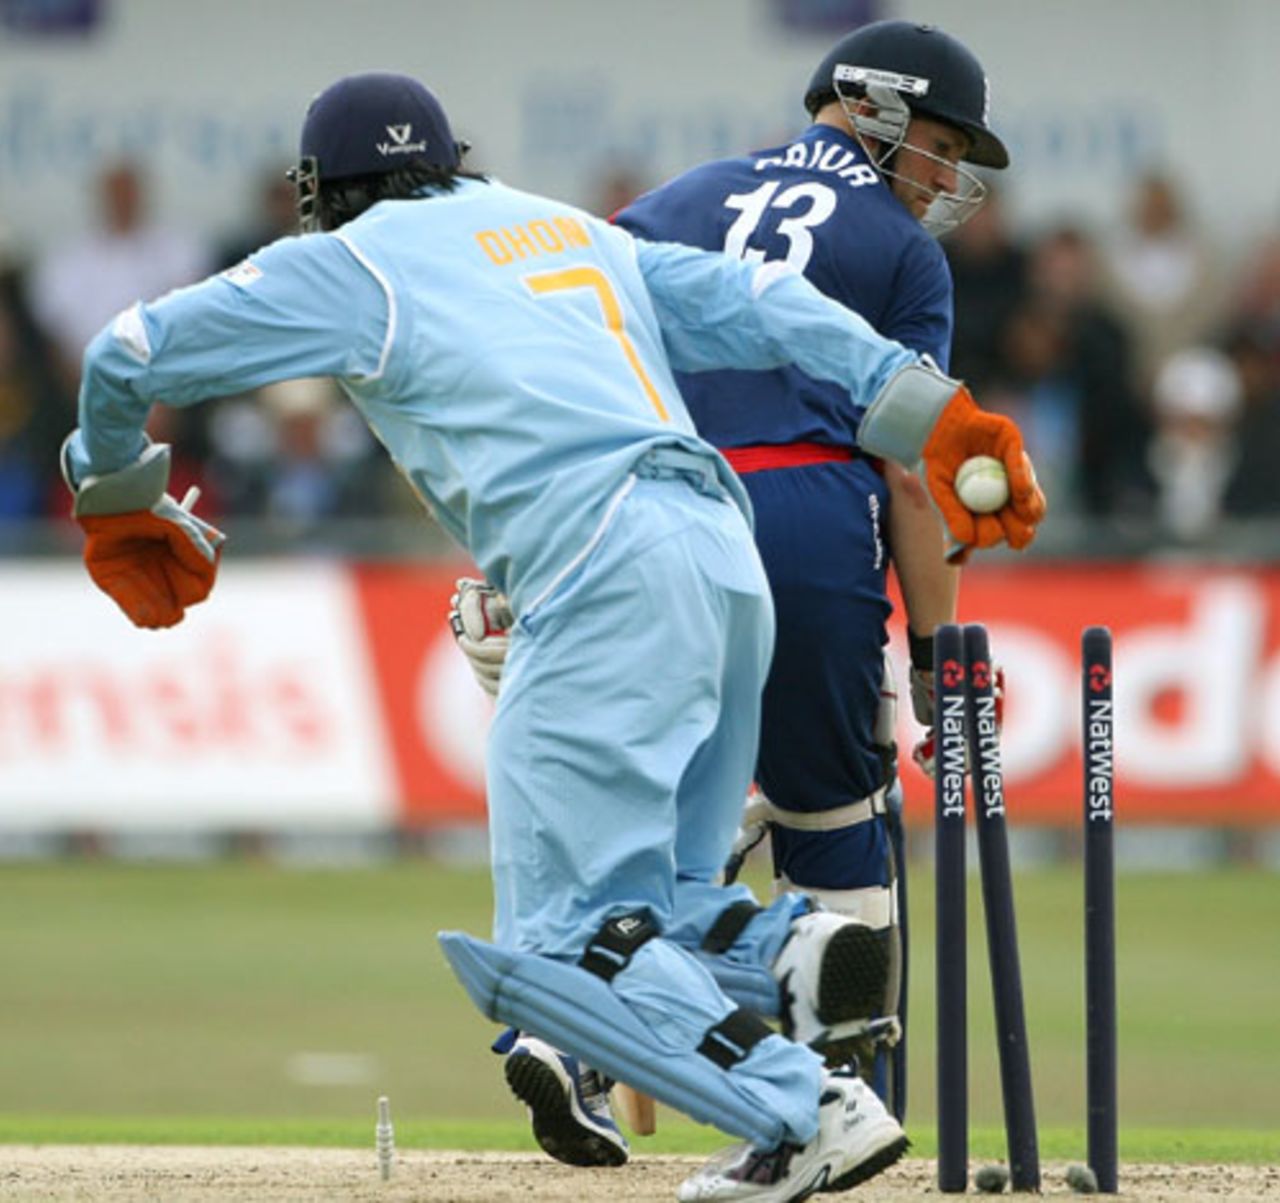  Mahendra Singh Dhoni stumps Matt Prior, England v India, 5th ODI, Headingley, September 2, 2007